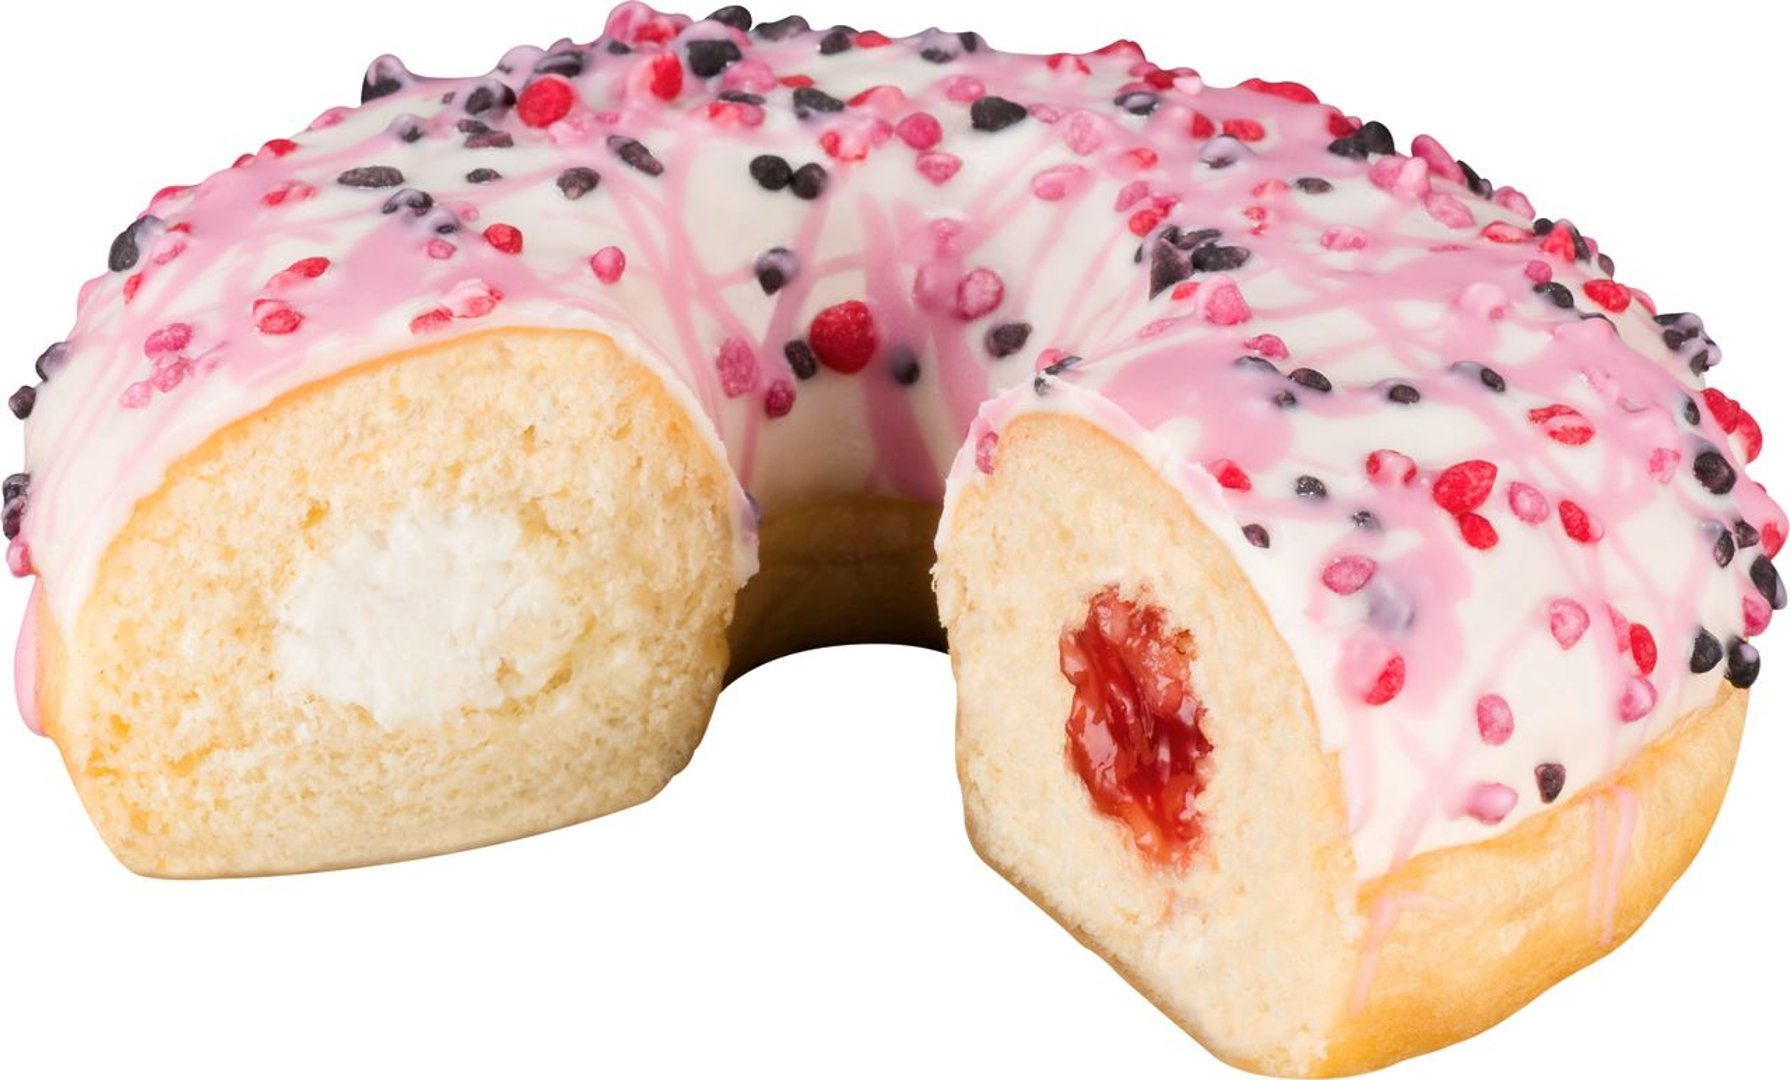 Baker & Baker - Donut Rasperry Cheesecake Sensation, tiefgefroren, fertig gebacken - 2 x 69 g Stücke